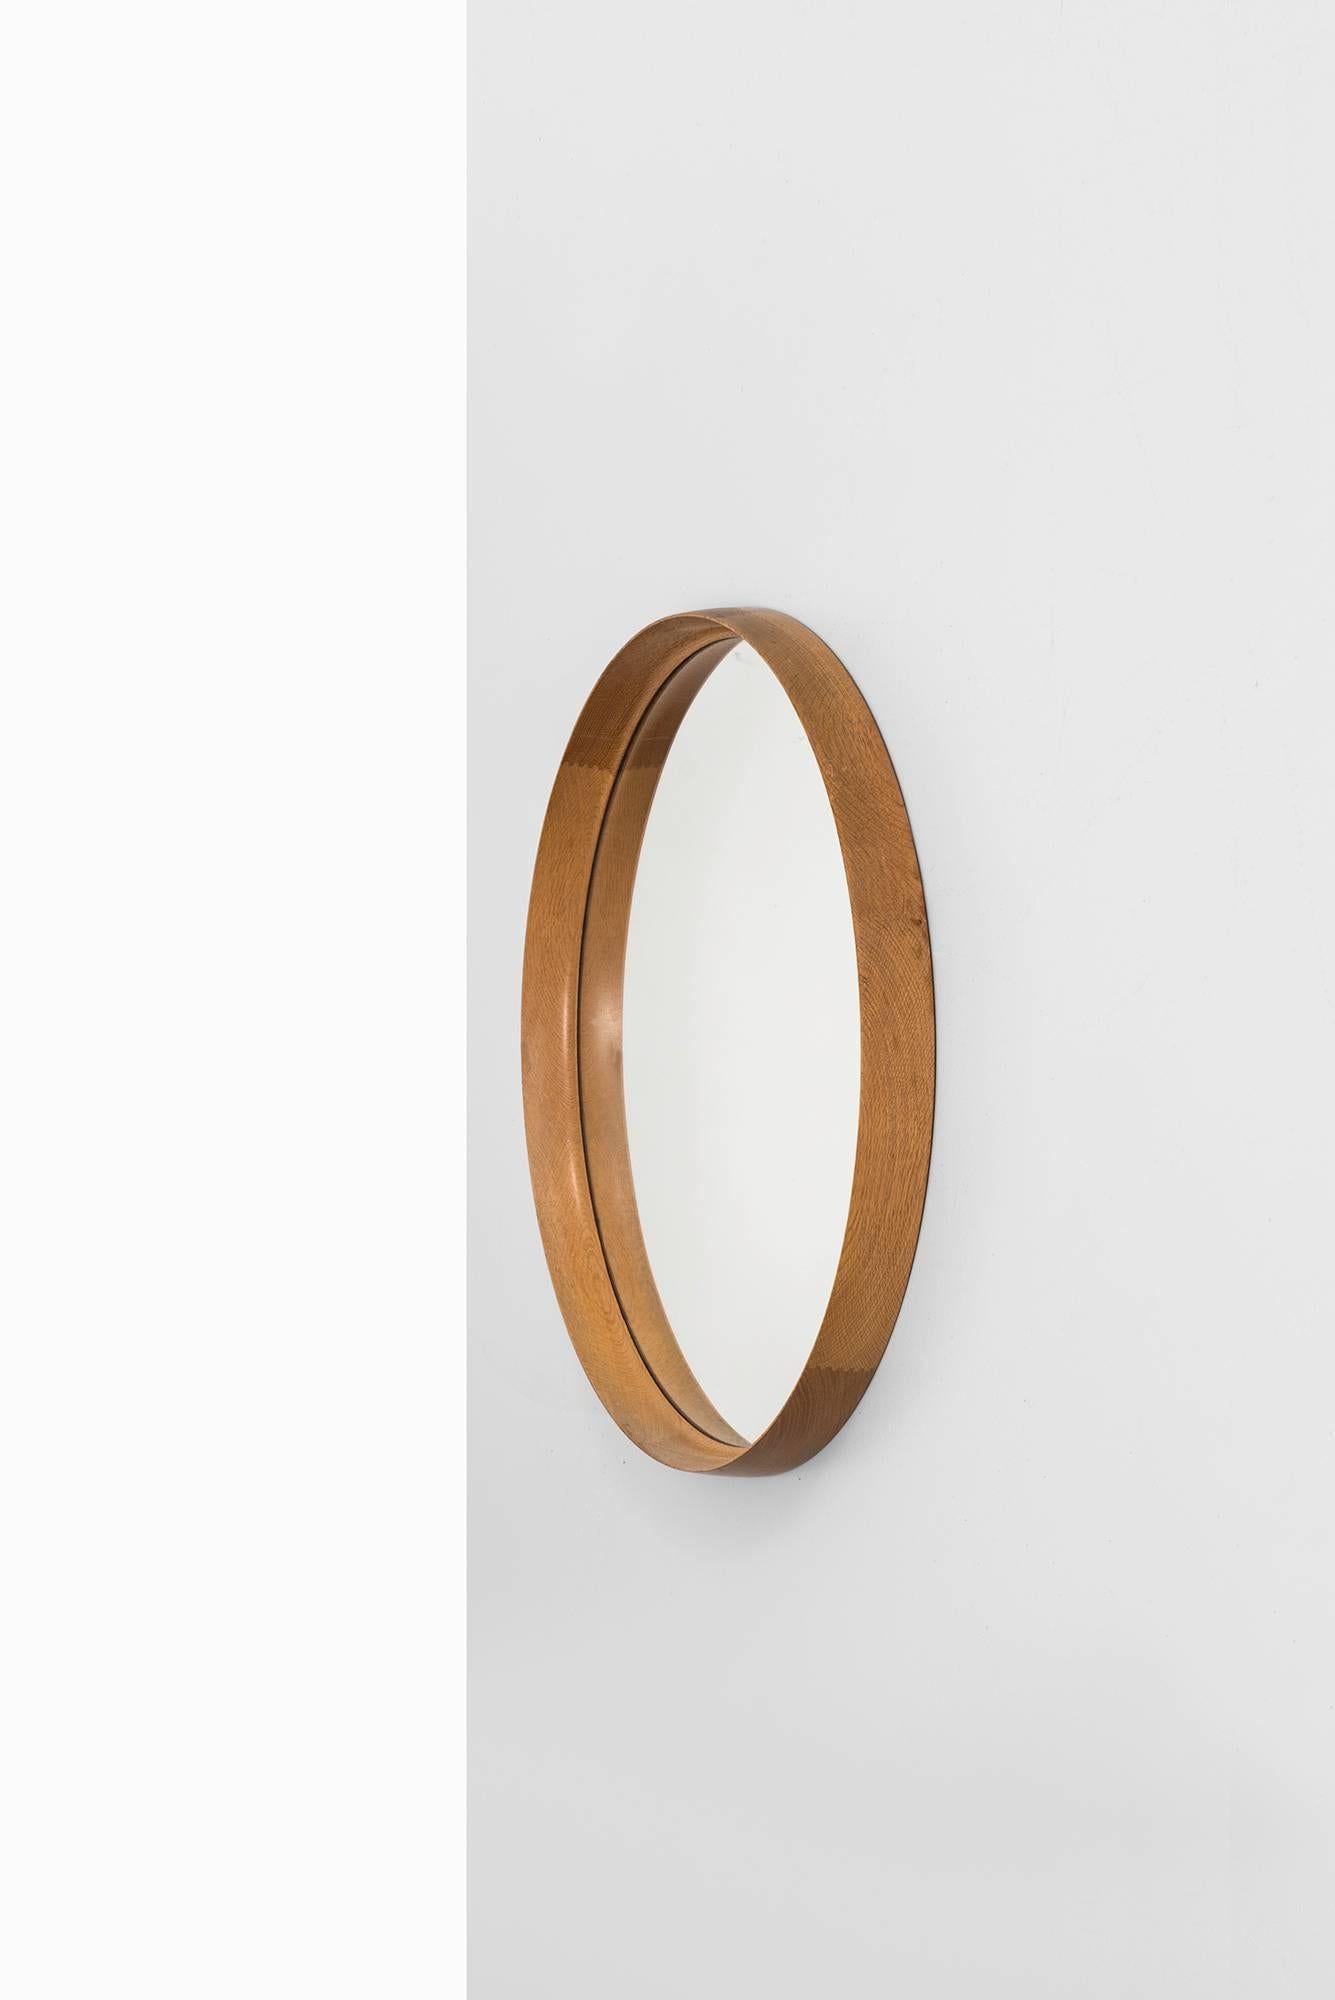 Rare and large mirror in oak designed by Uno & Östen Kristiansson. Produced by Luxus in Vittsjö, Sweden.